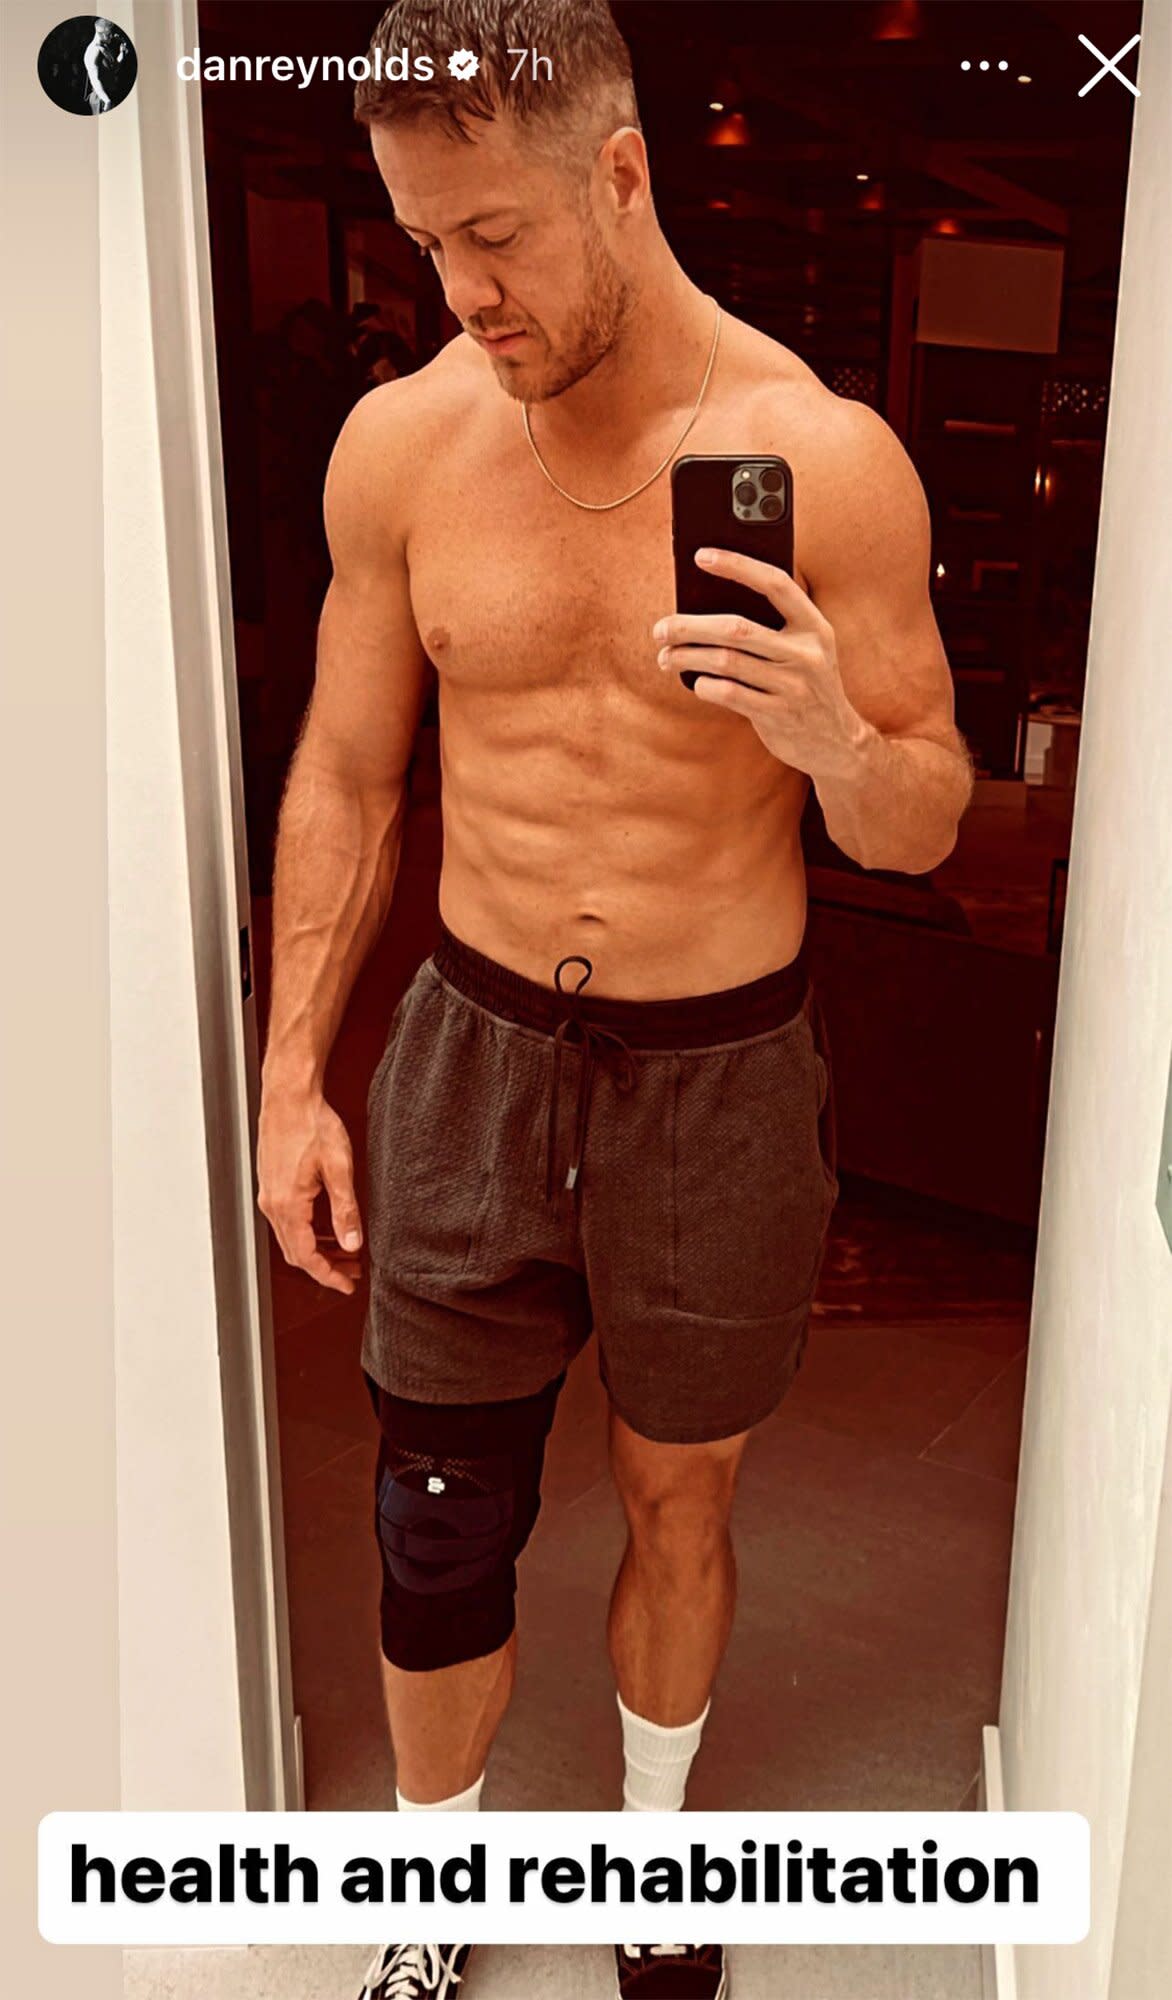 Dan Reynolds/Instagram. Imagine Dragons' Dan Reynolds Goes Shirtless After Knee Sprain: 'Health and Rehabilitation'.